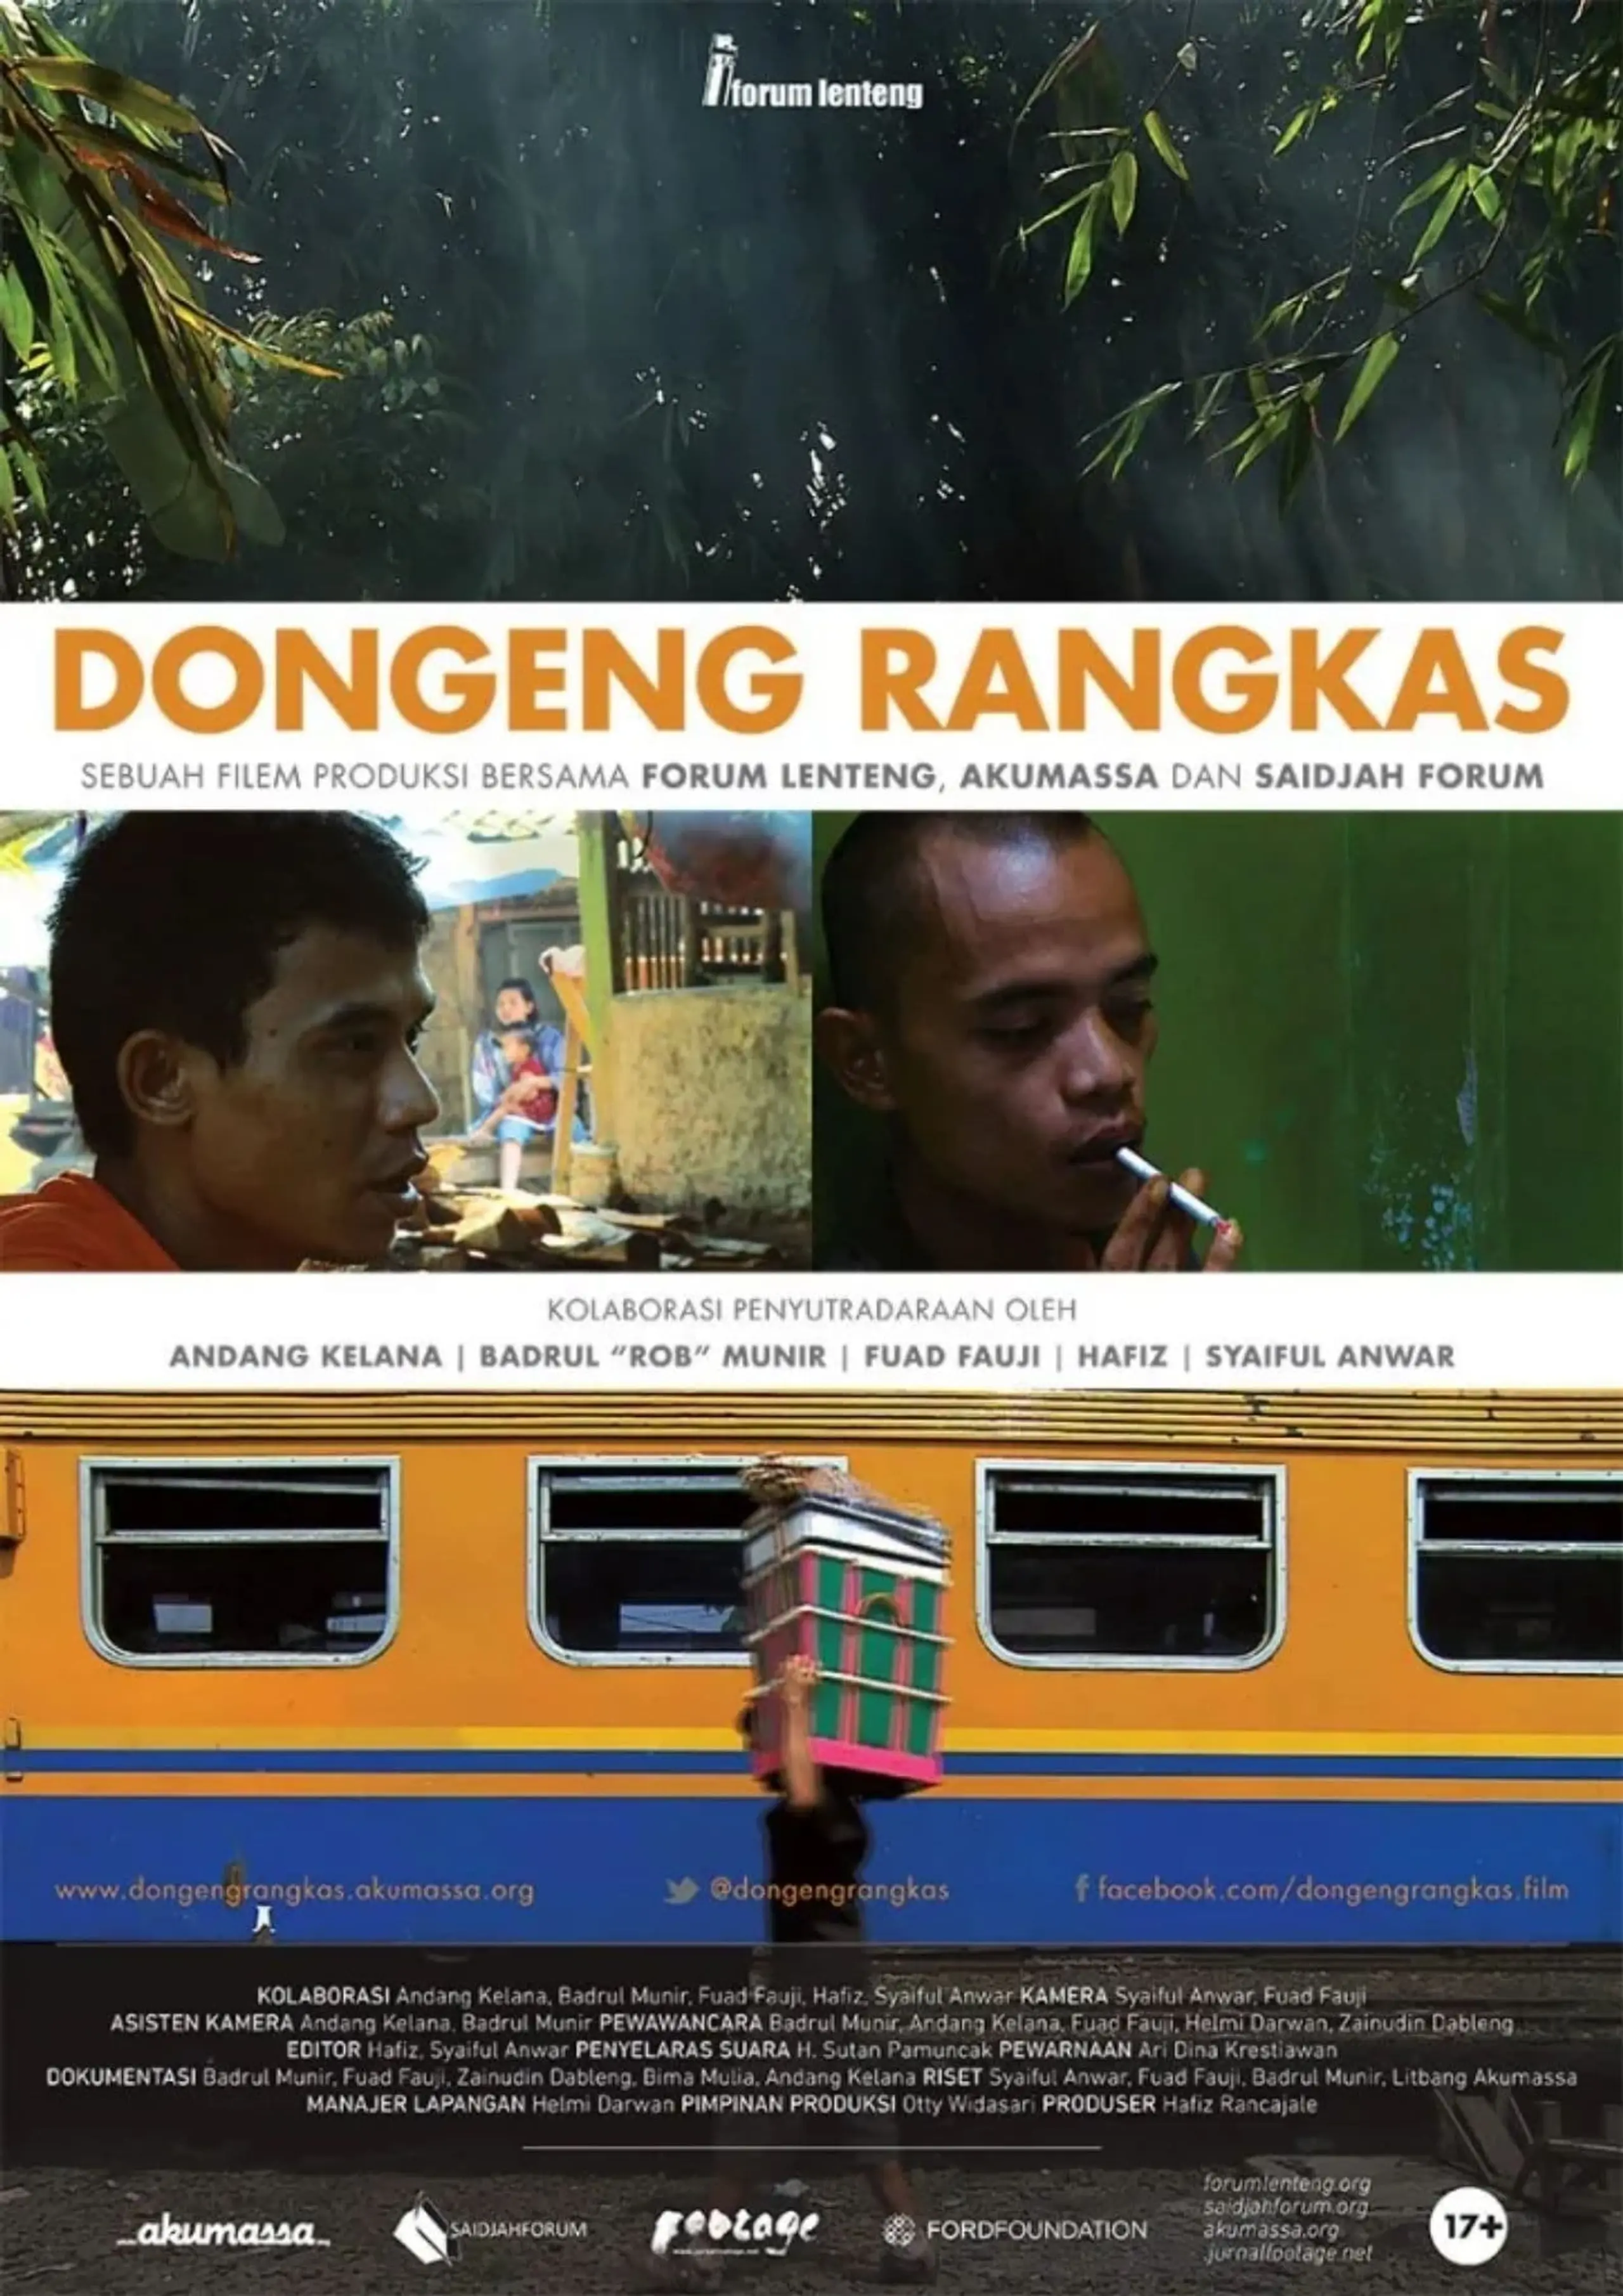 Dongeng Rangkas